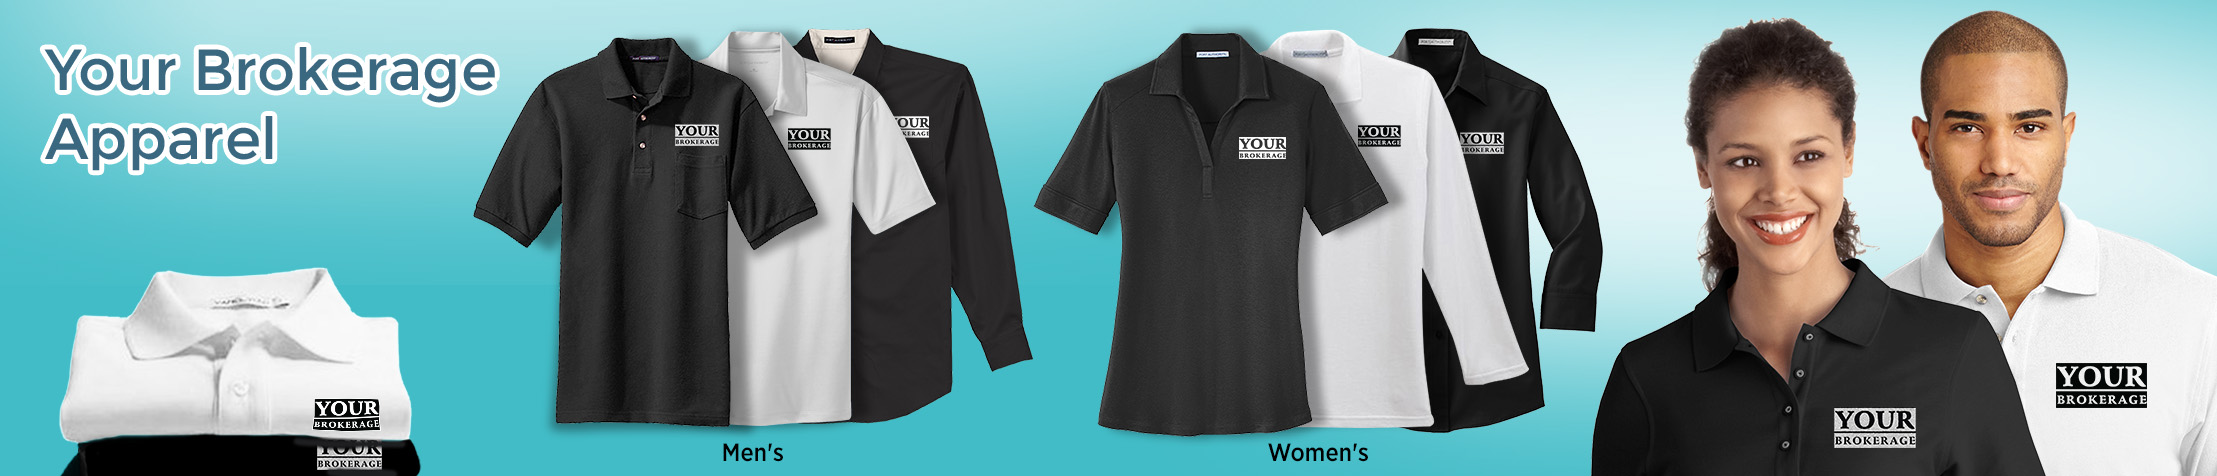 Counselor Realty Real Estate Apparel - logo apparel | Men's & Women's shirts | BestPrintBuy.com